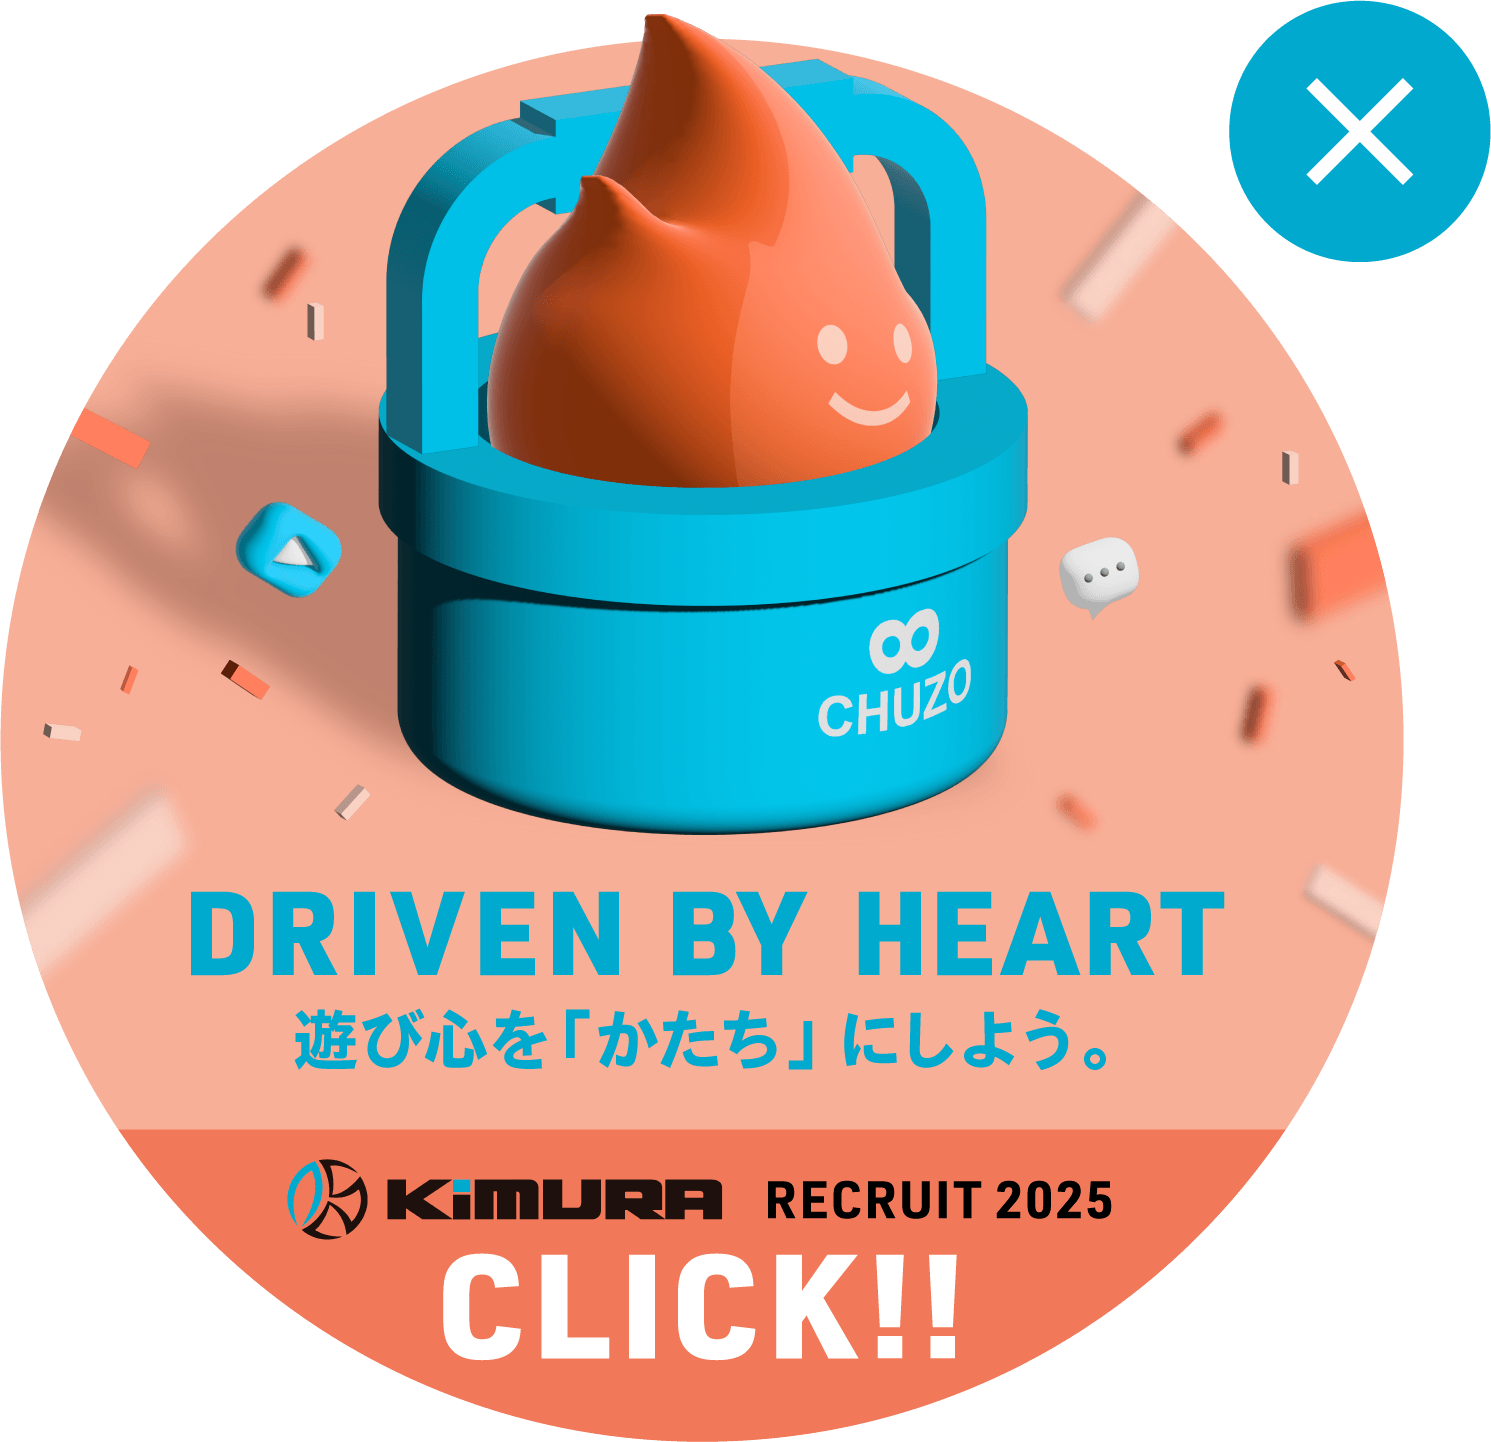 DRIVEN BY HEART 遊び心をかたちにしよう。KIMURA RECRUIT 2025 CLICK